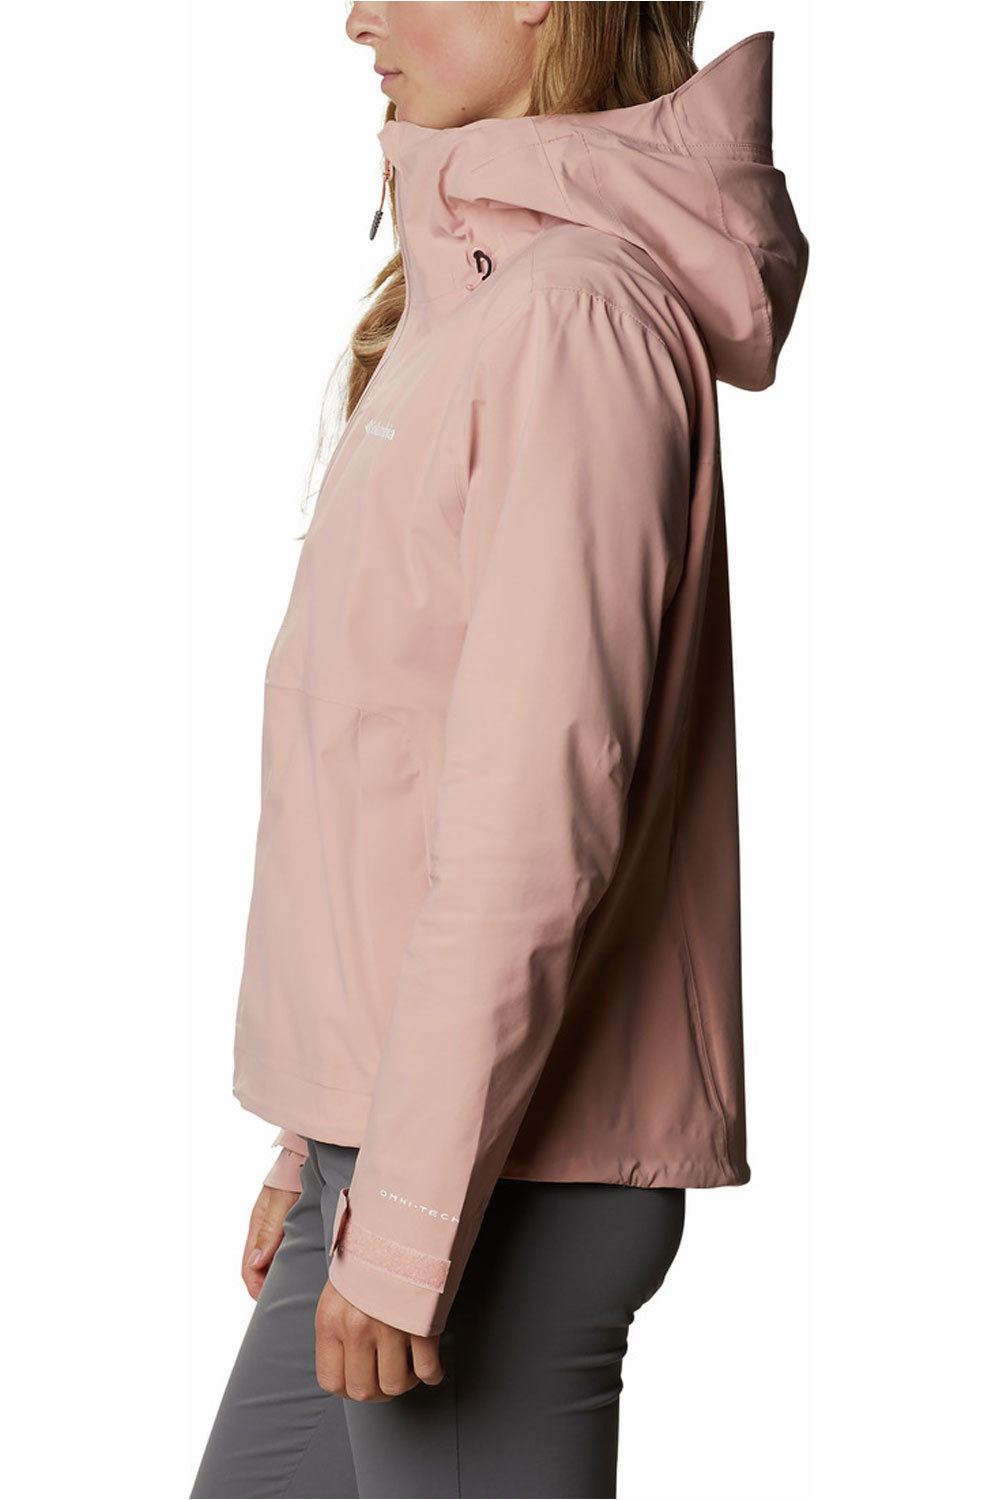 Columbia chaqueta impermeable mujer Omni-Tech Ampli-Dry Shell vista detalle